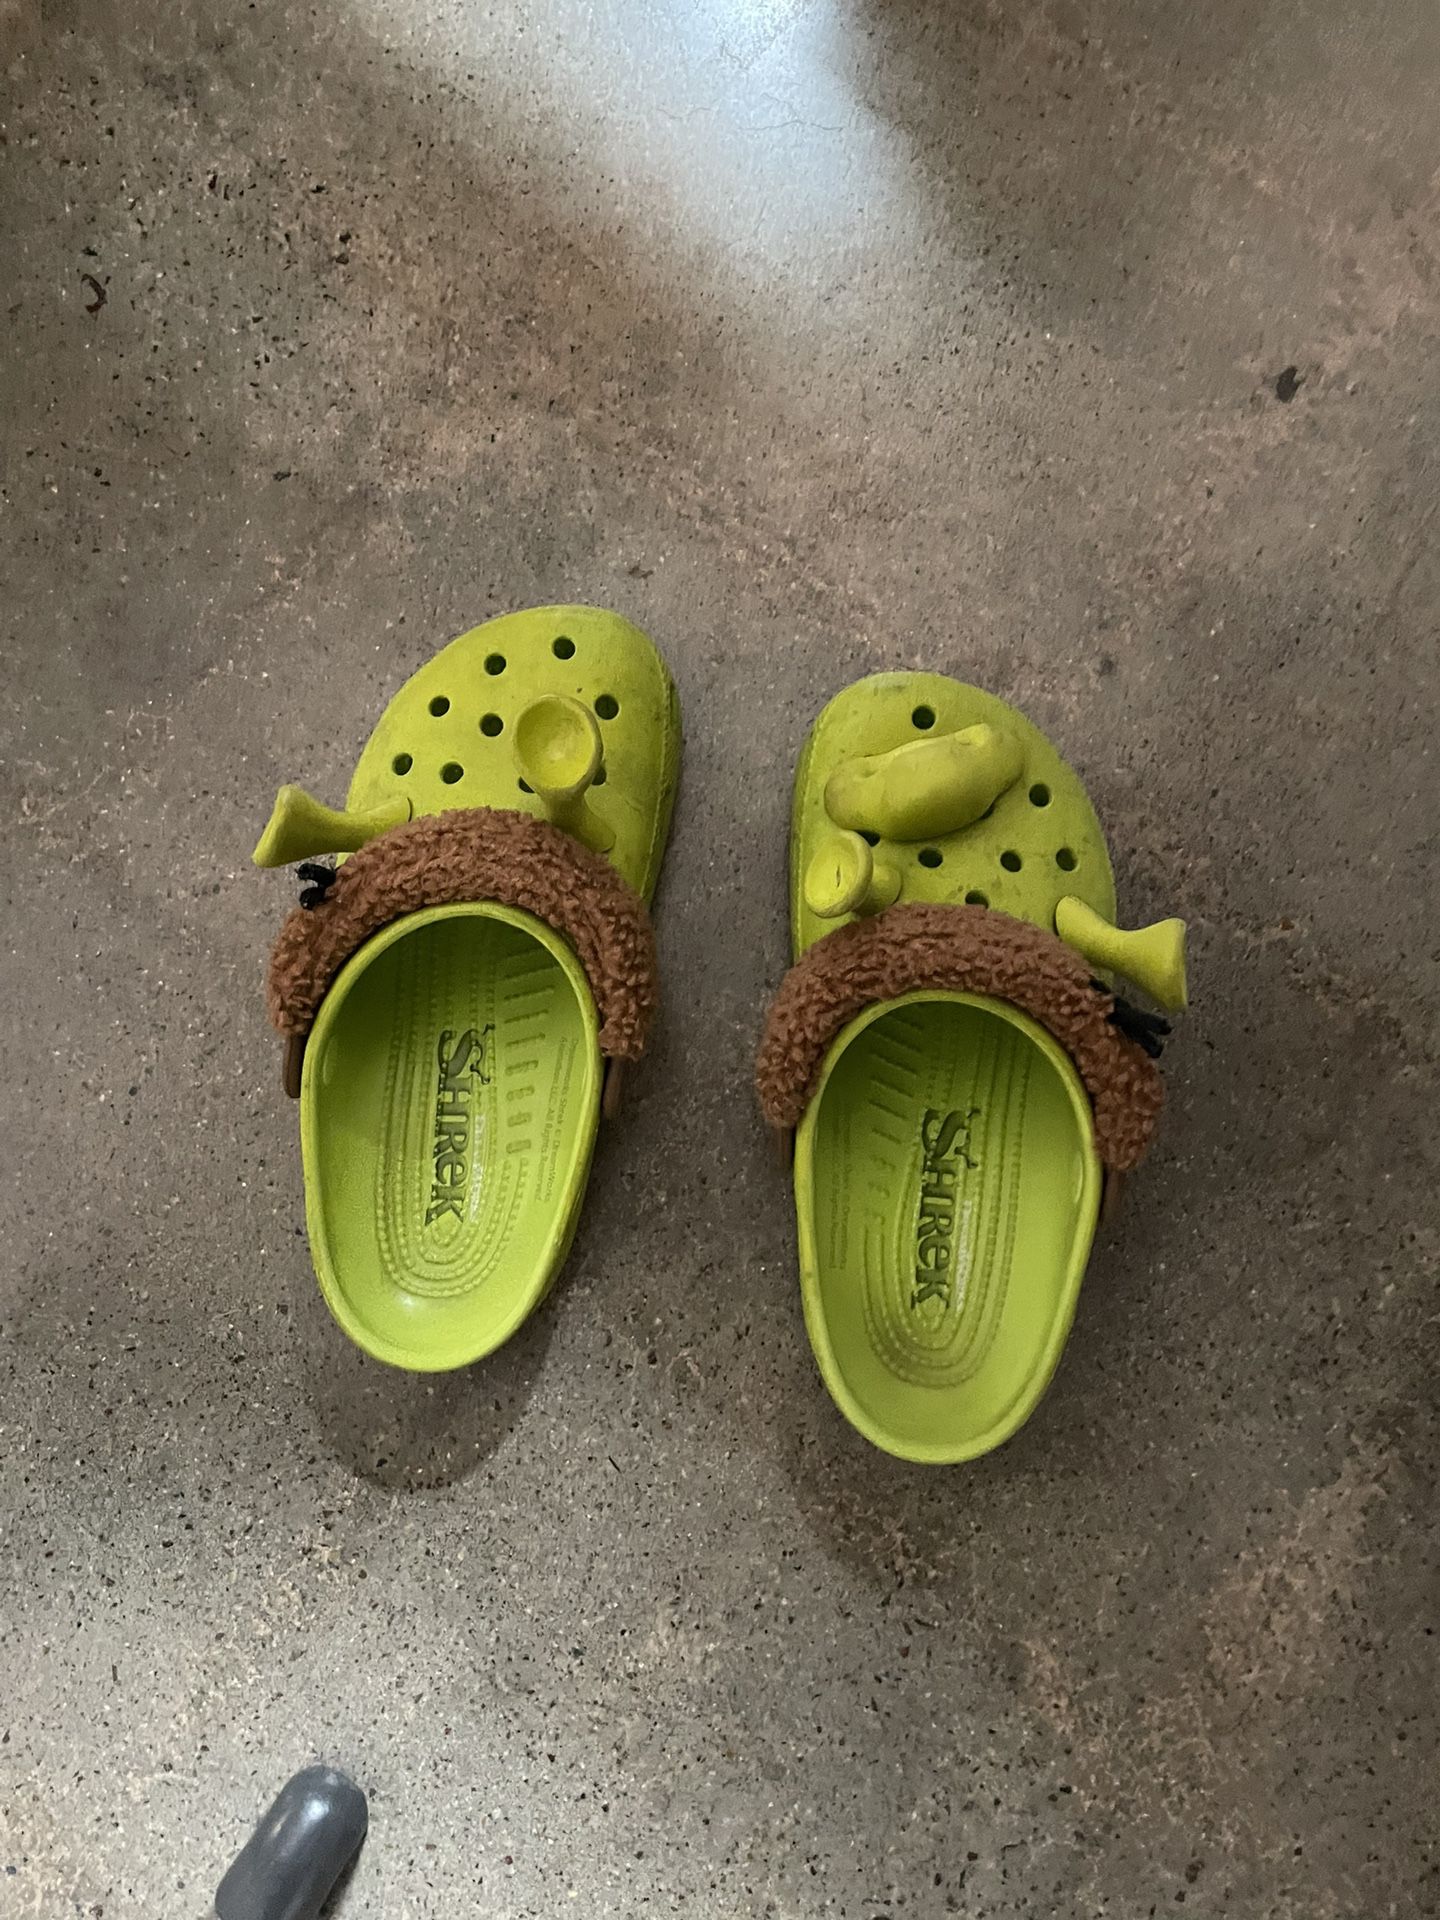 Shrek Crocs Missing A Nose